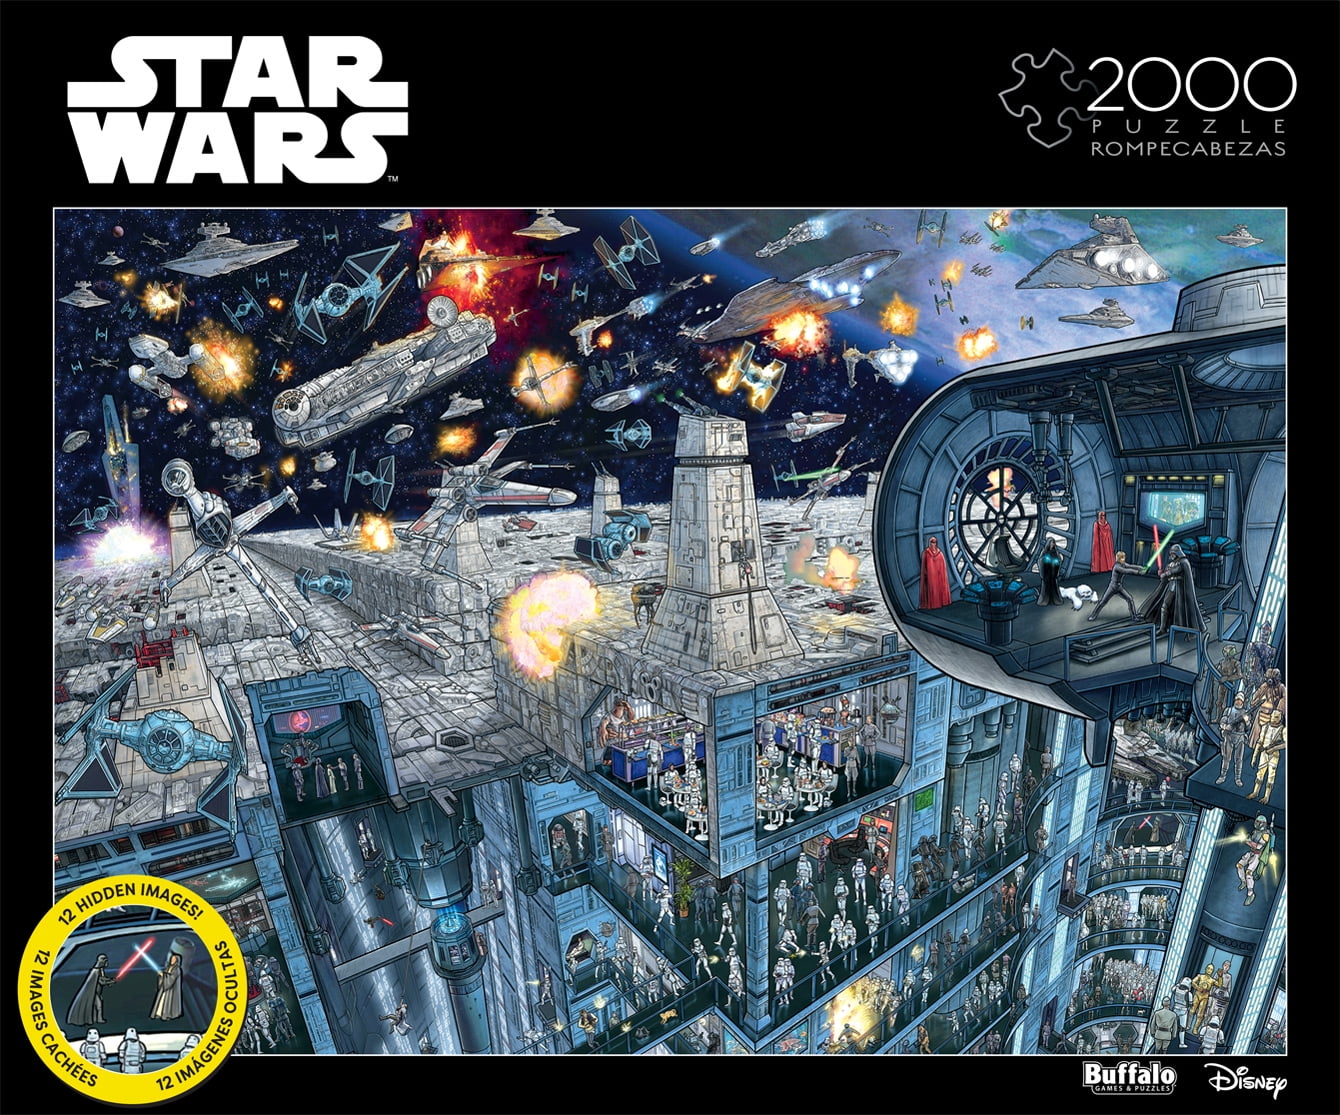 NEW Star Wars "You Were The Chosen One" Jigsaw Puzzle 2000 Piece - Disney 